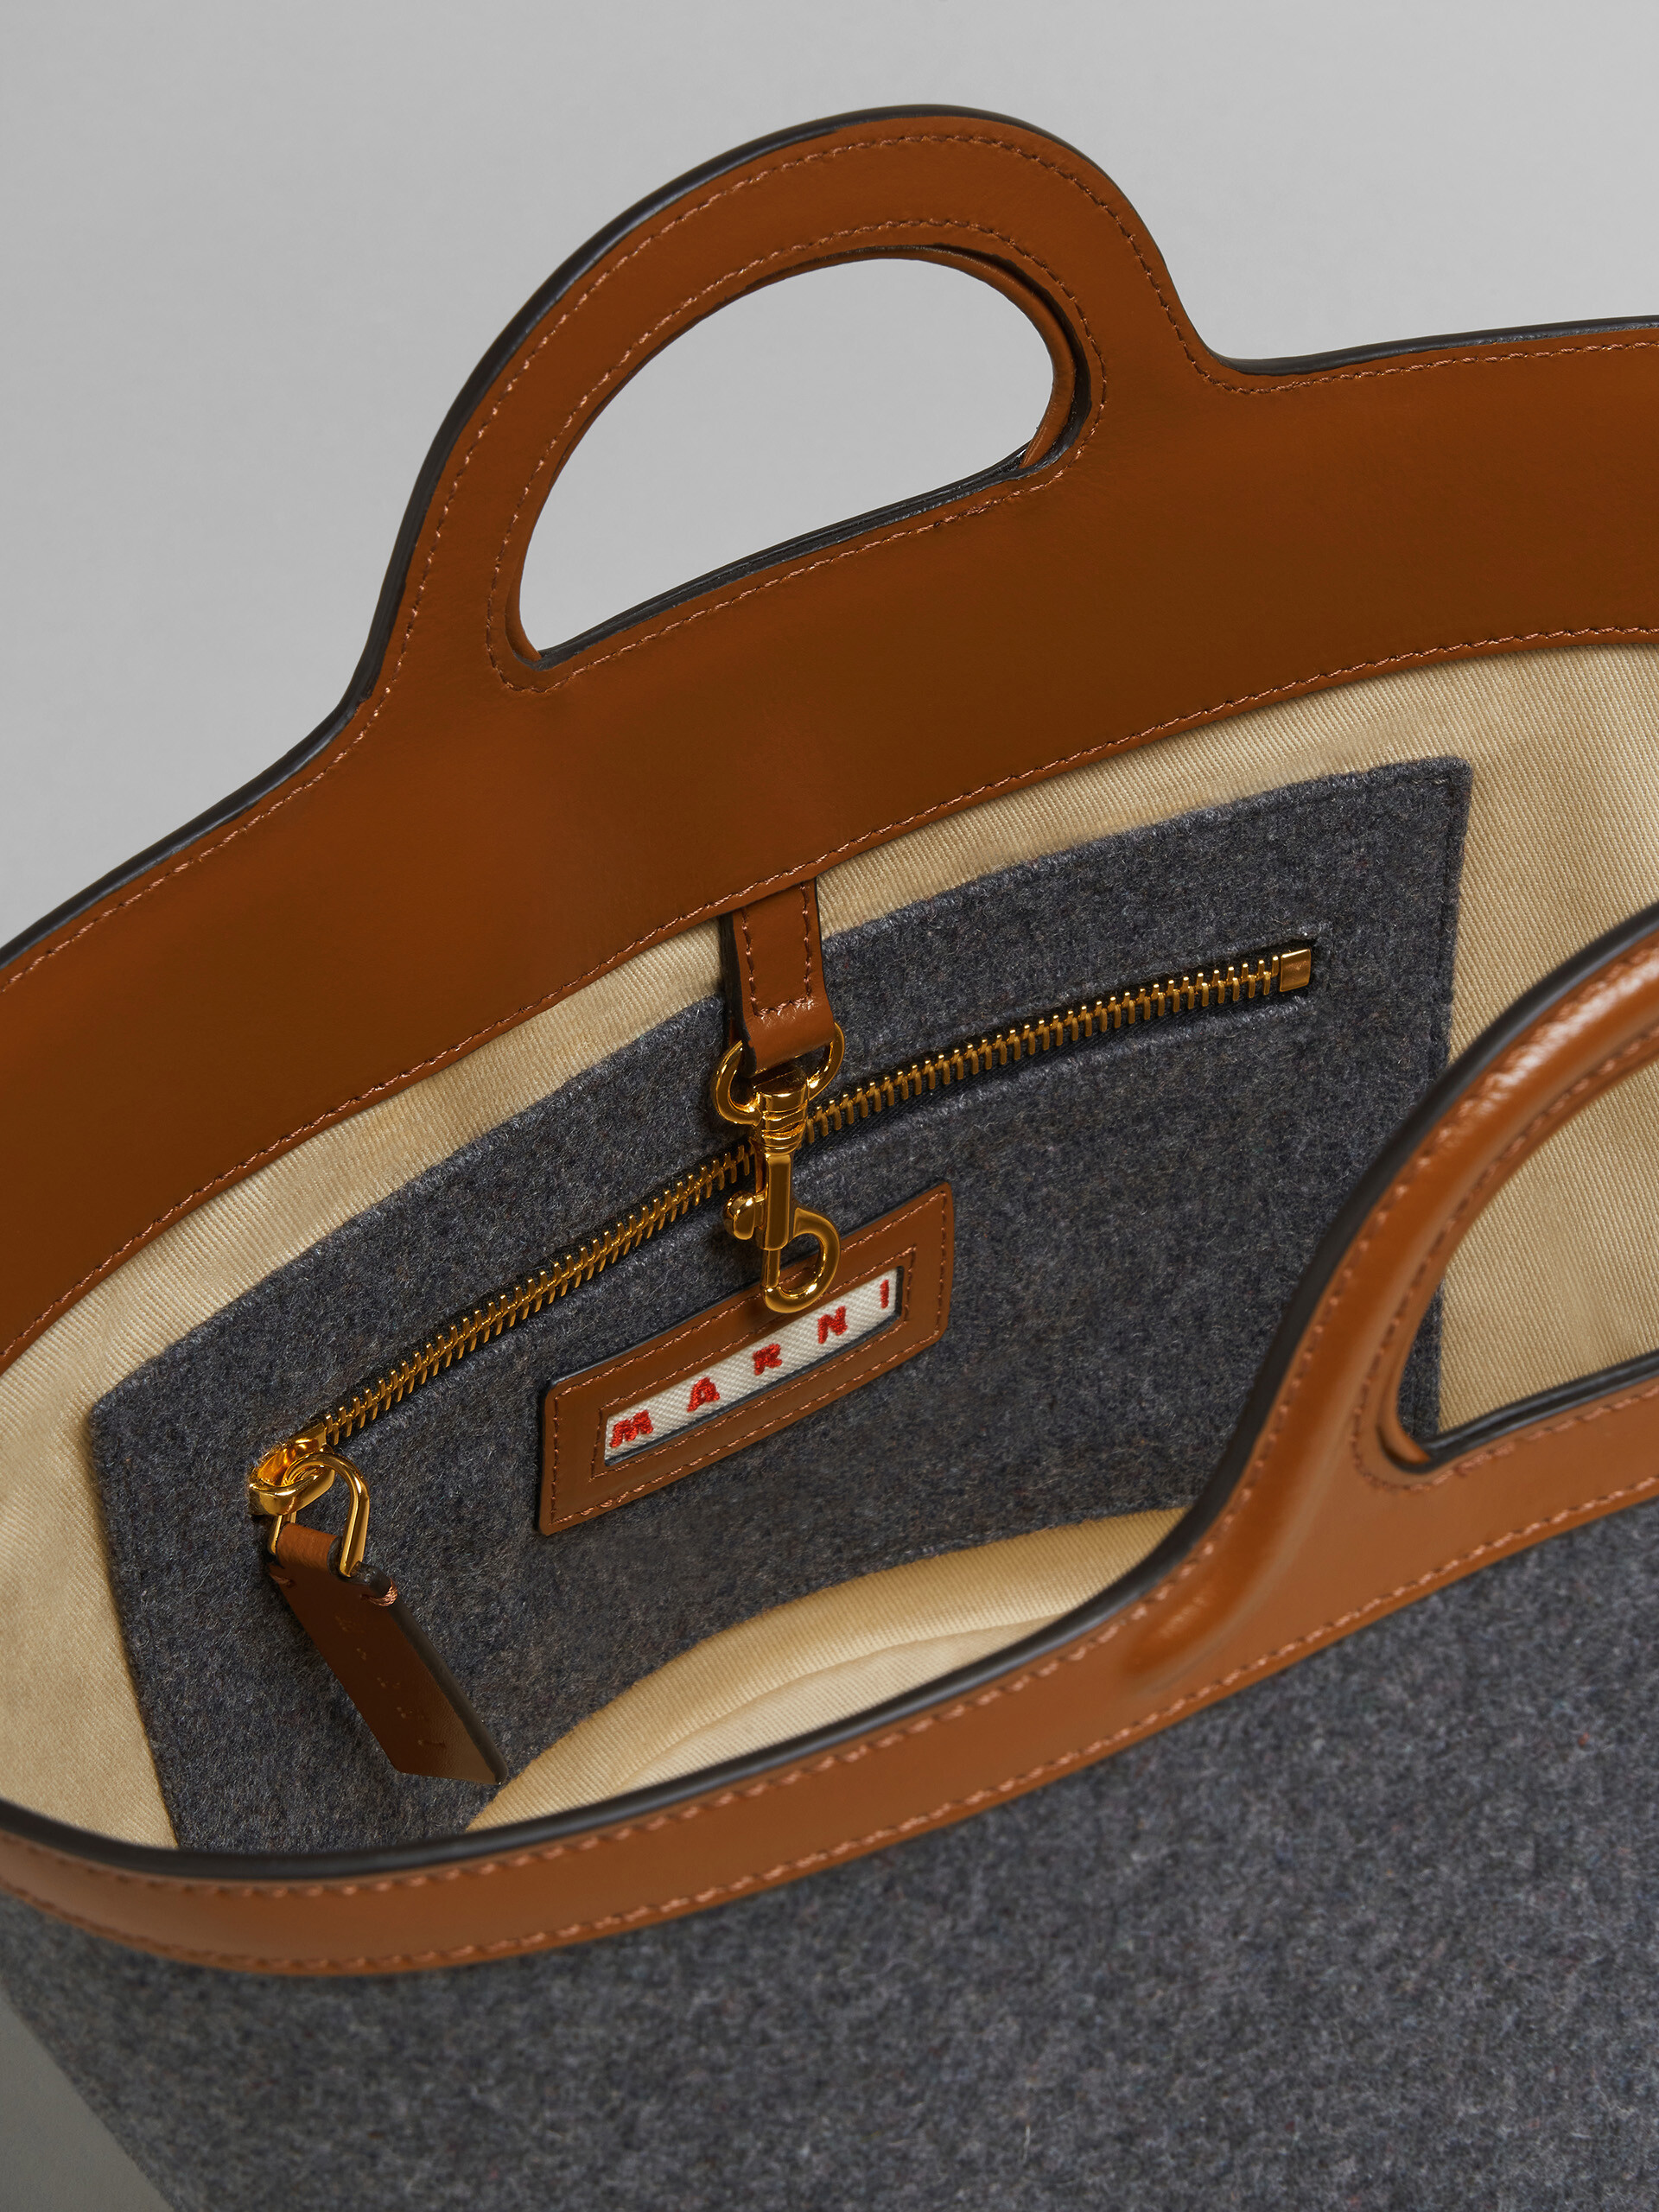 TROPICALIA small bag in felt and leather - Handbag - Image 4